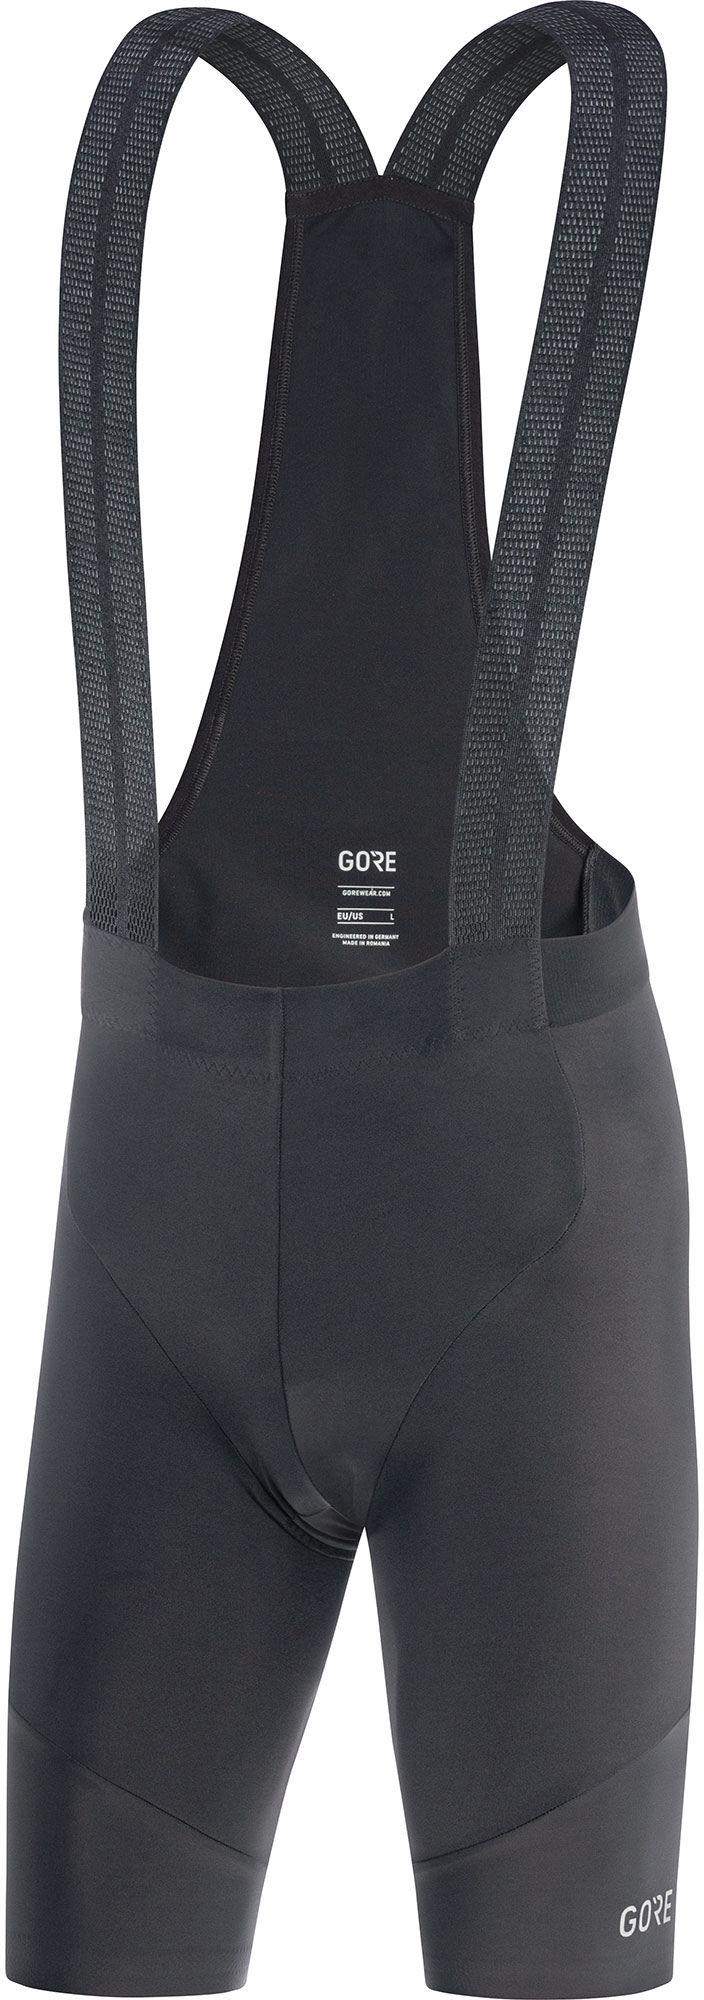 Image of GOREWEAR Ardent Bib Shorts Plus - Black